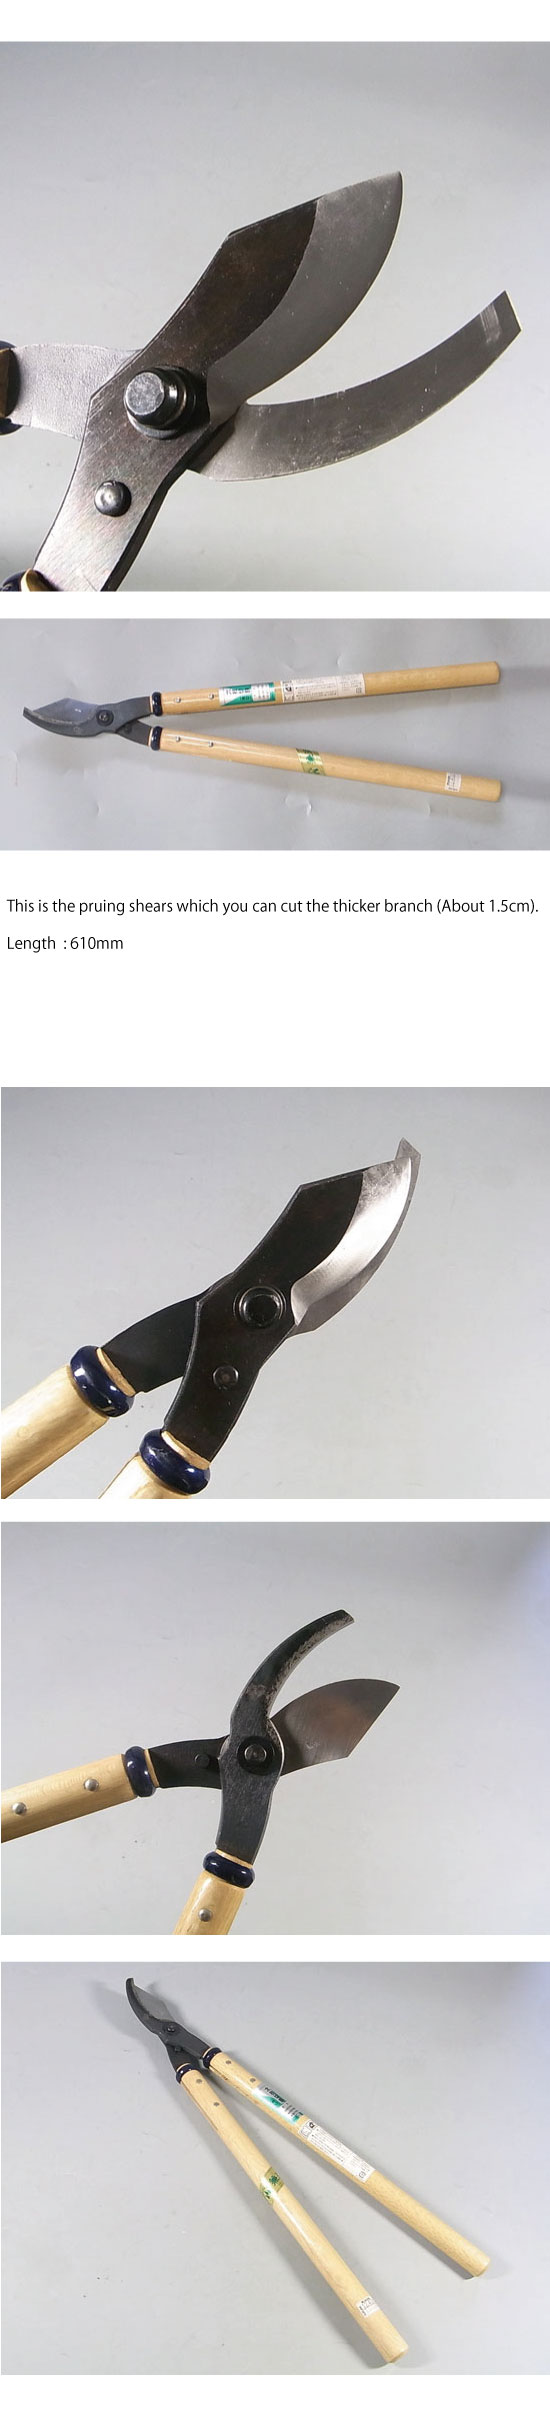 Both hands pruning shears (Pruning scissors) [ KANESHIN ] " Length 610mm / Weight 1300g" No.138